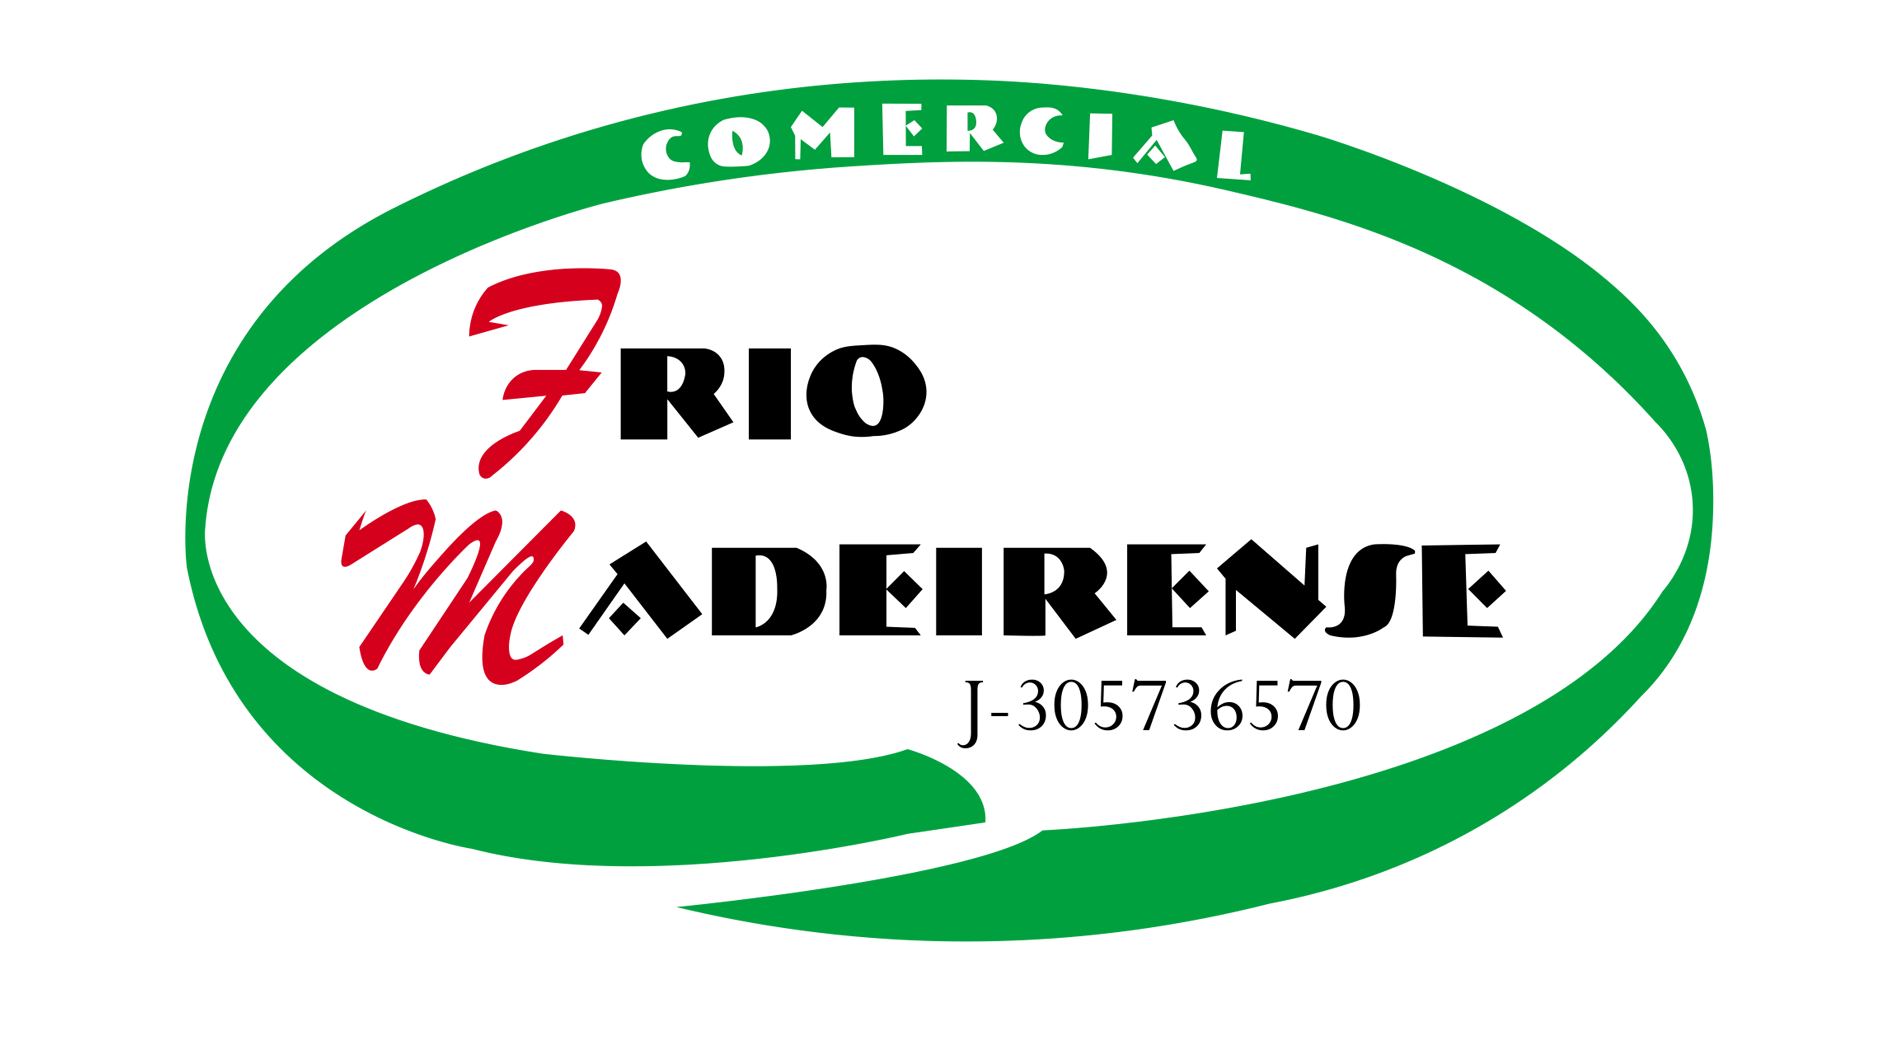 Comercial Frio Madeirense